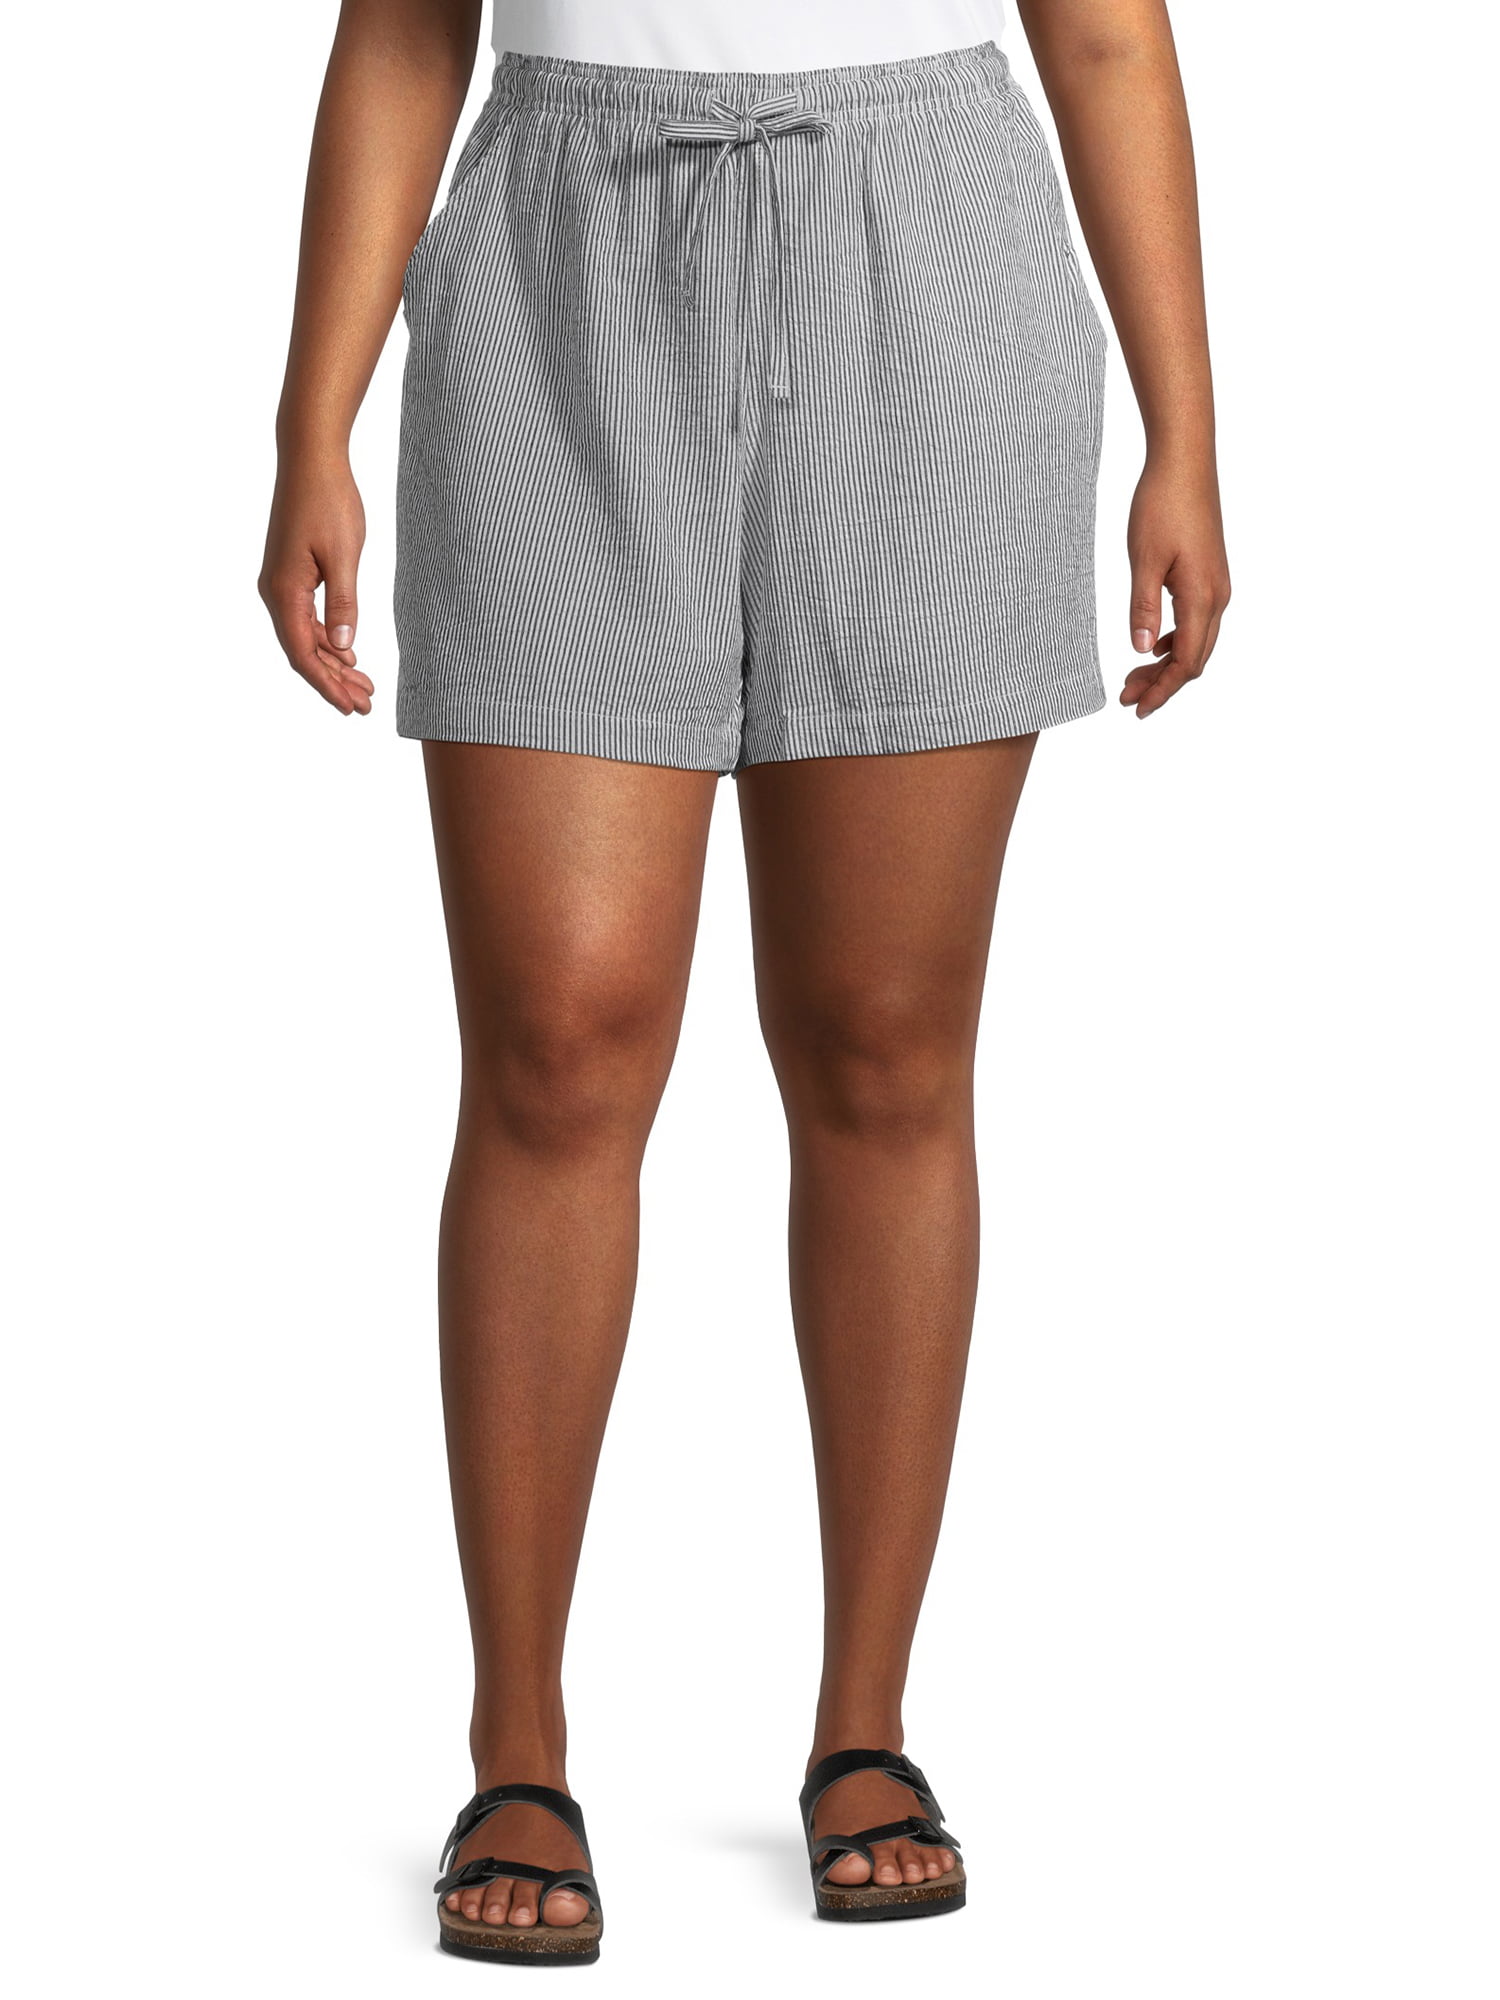 Erika Women's Plus Size Lila Soft Pull-On Railroad Stripe Shorts